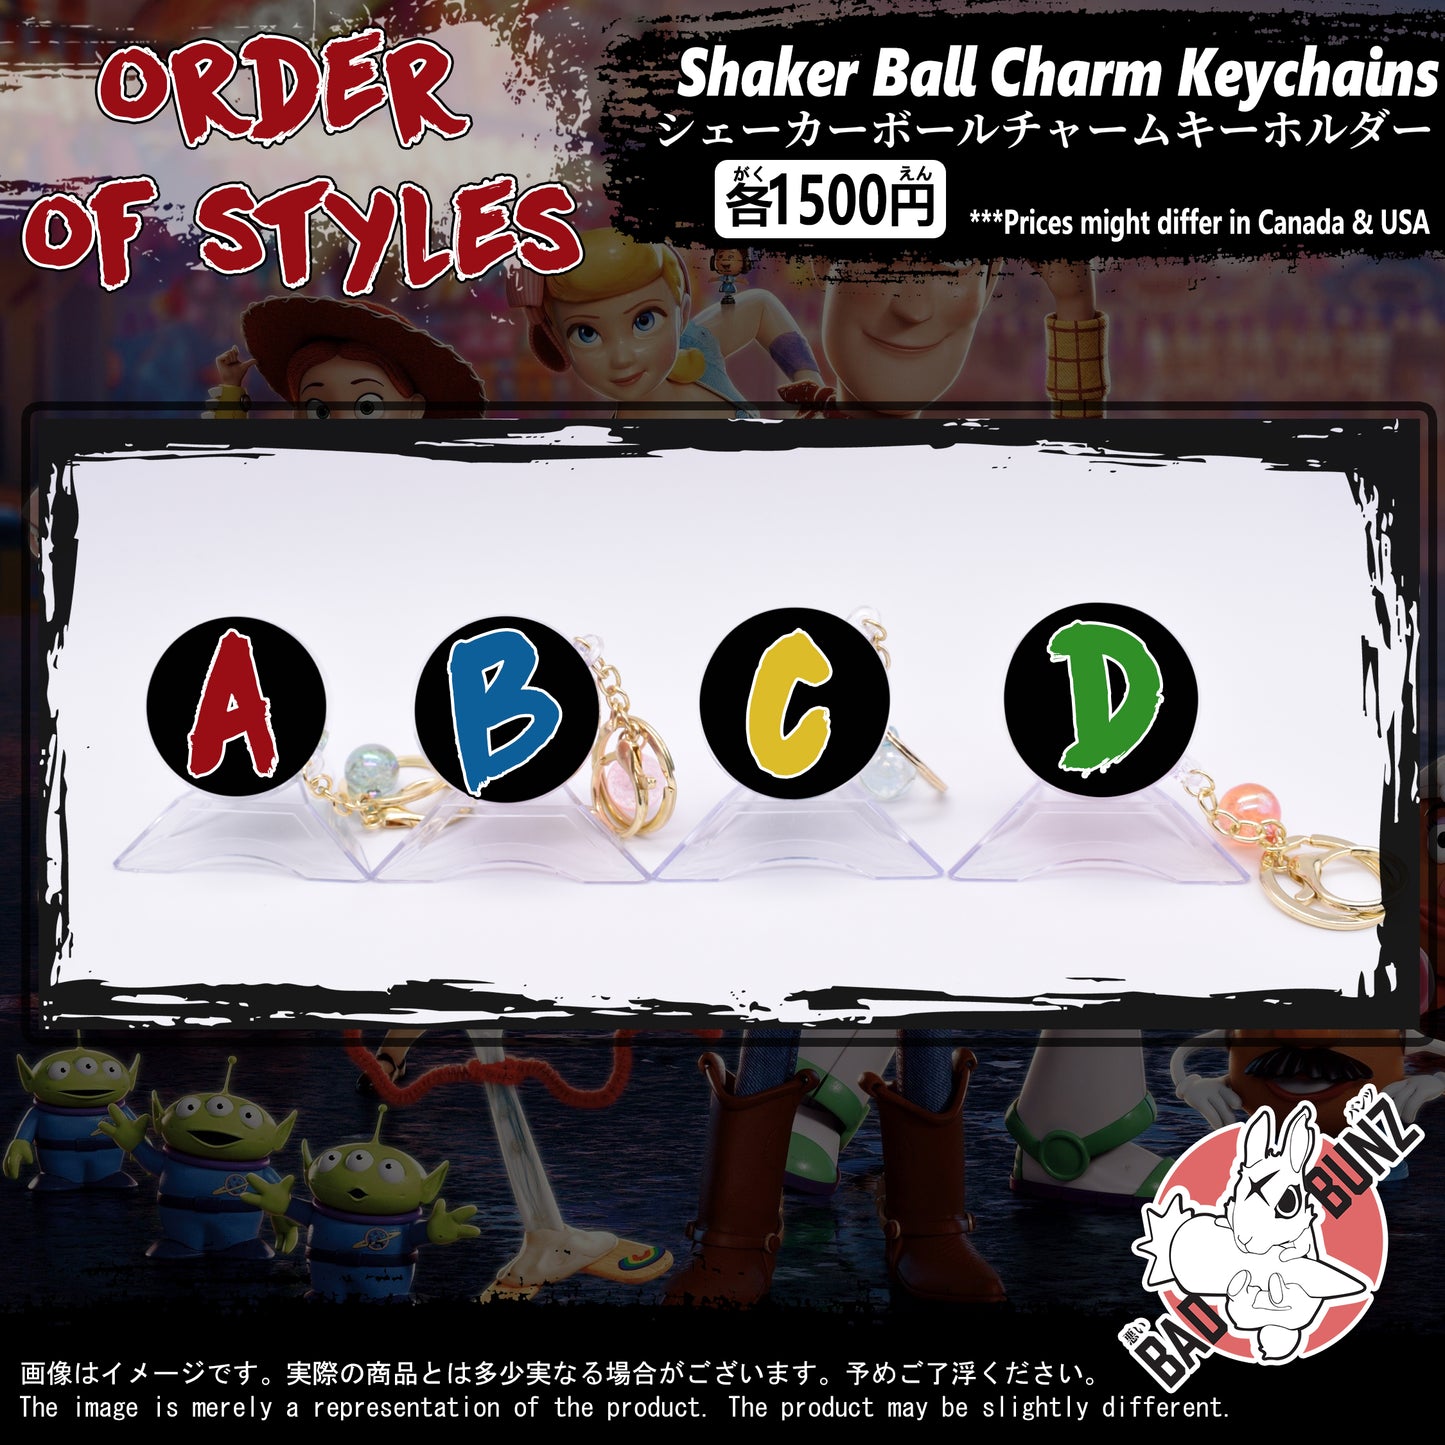 (DSN-01BALL) Disney Movie Shaker Ball Charm Keychain